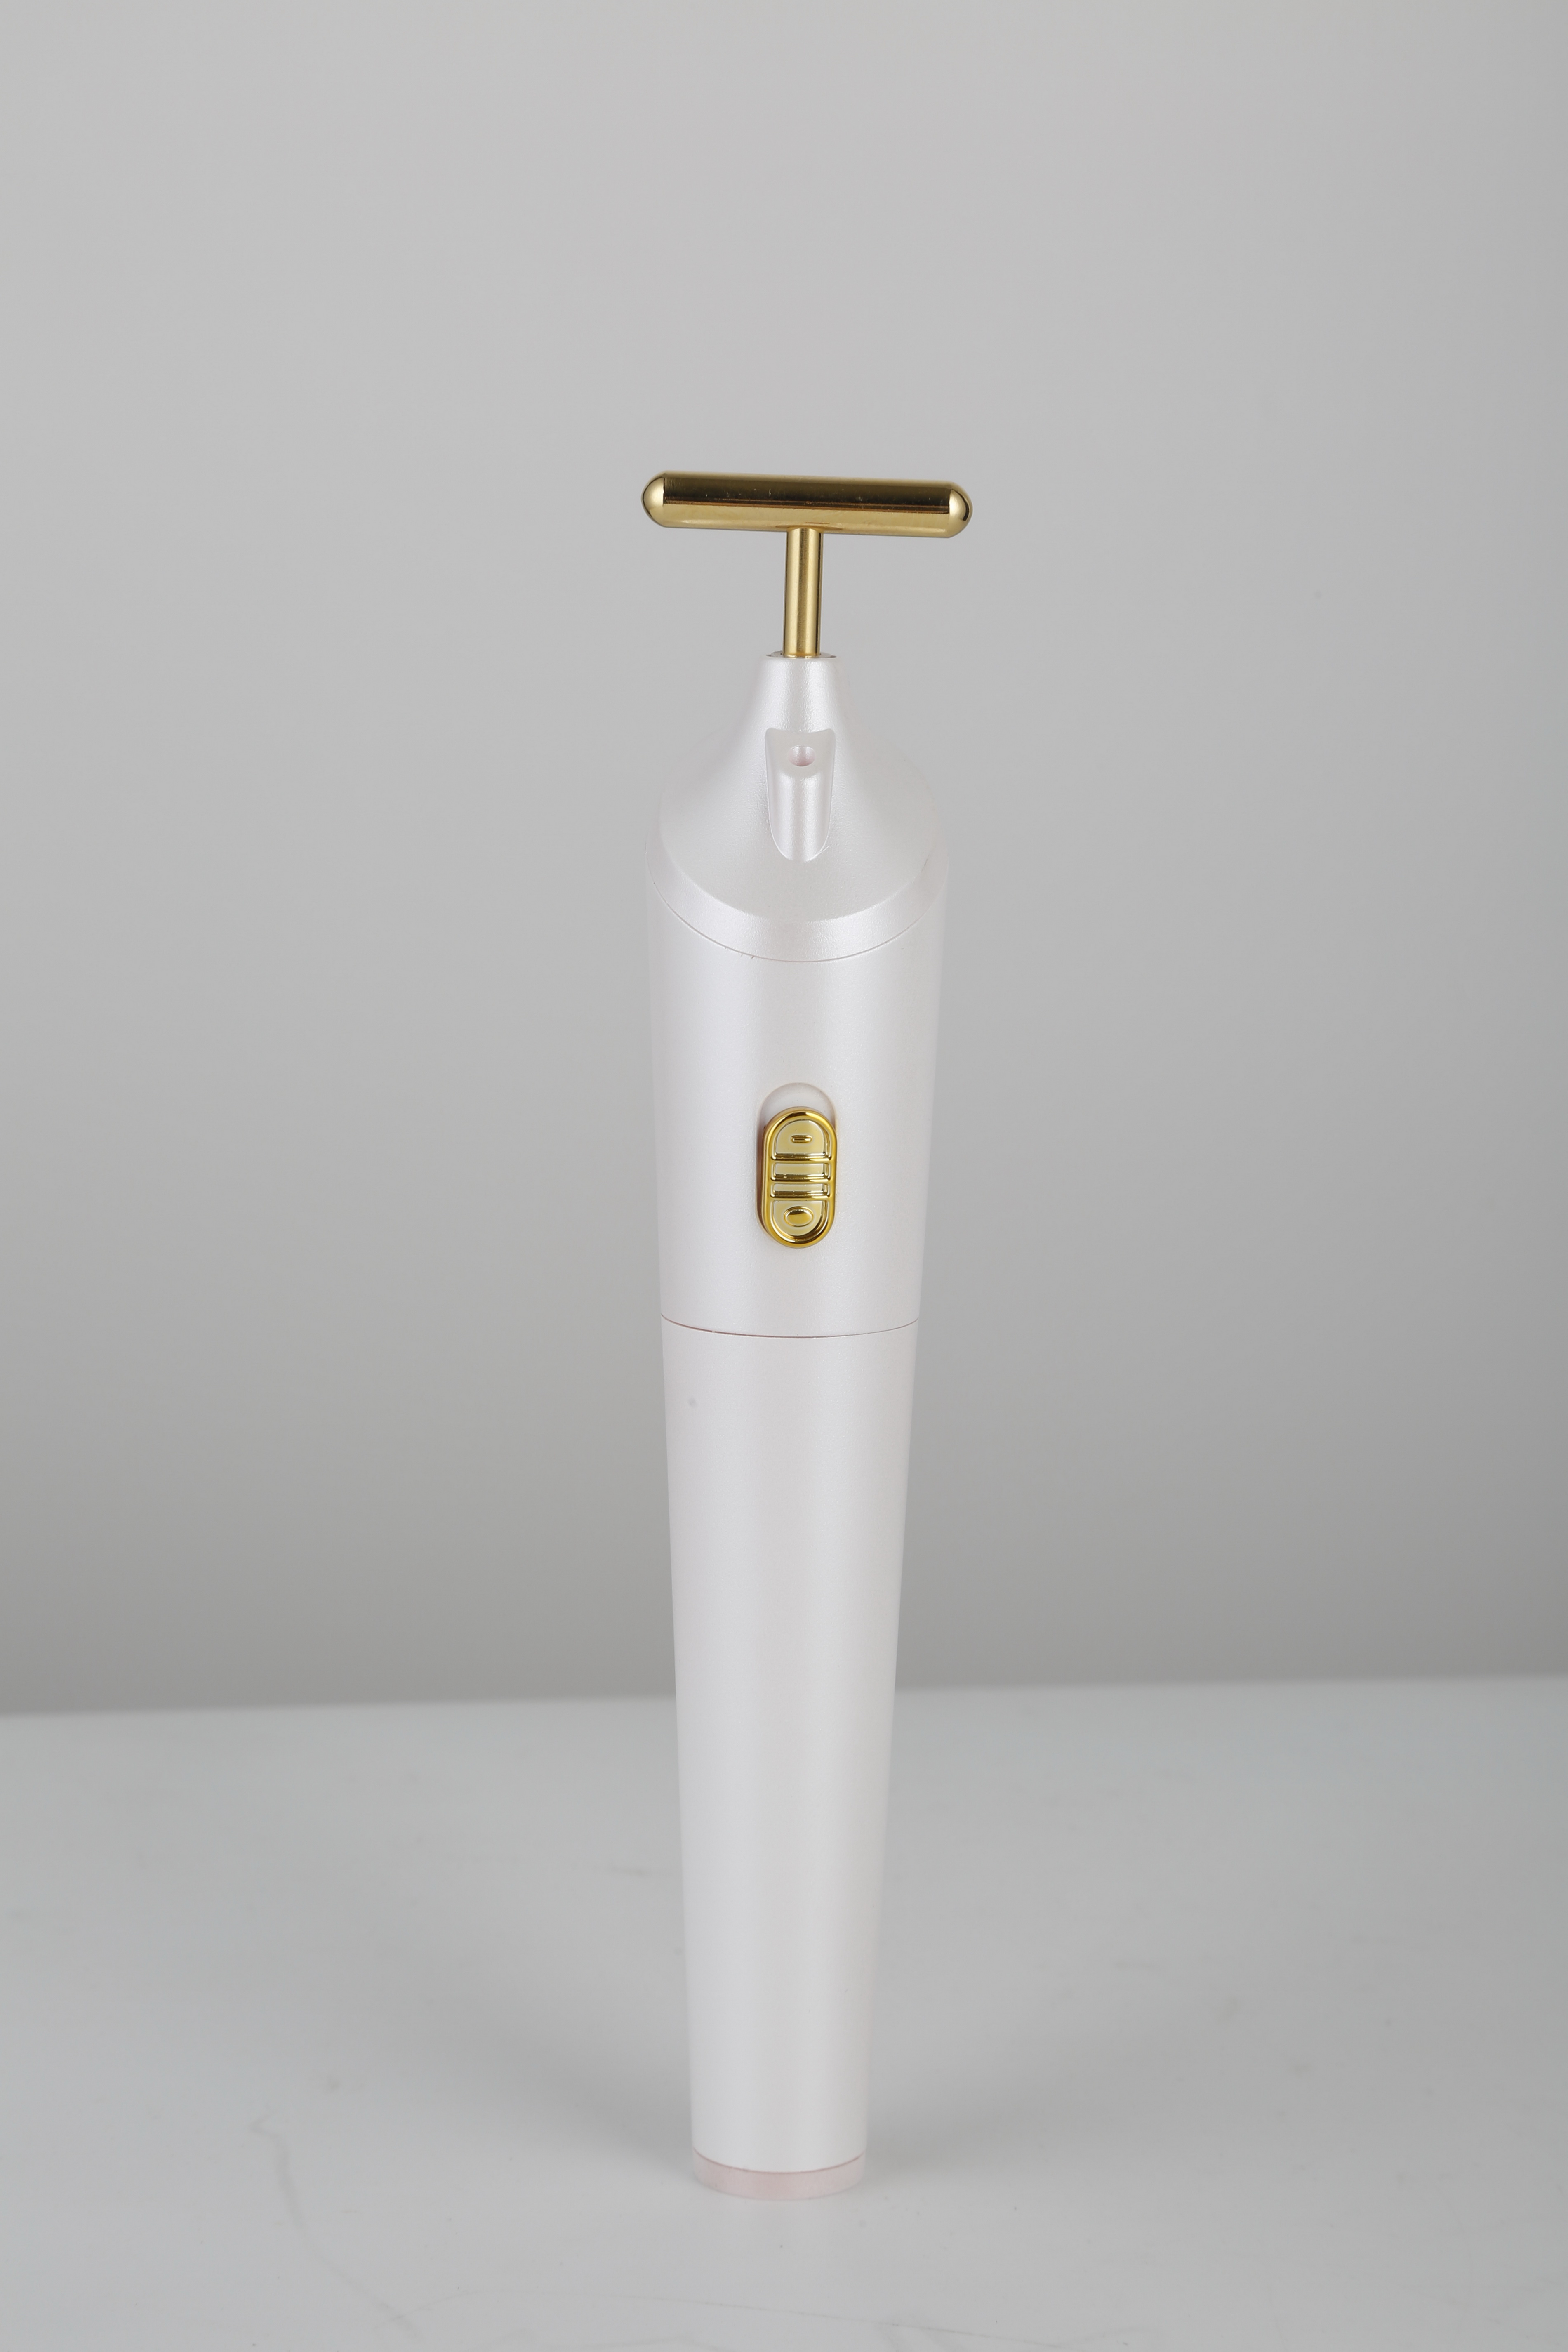 Sainbeauty Wholesale Thin Face Massage Stick Device microcurrent beauty bar face massager Gold Vibration Lifting Stick